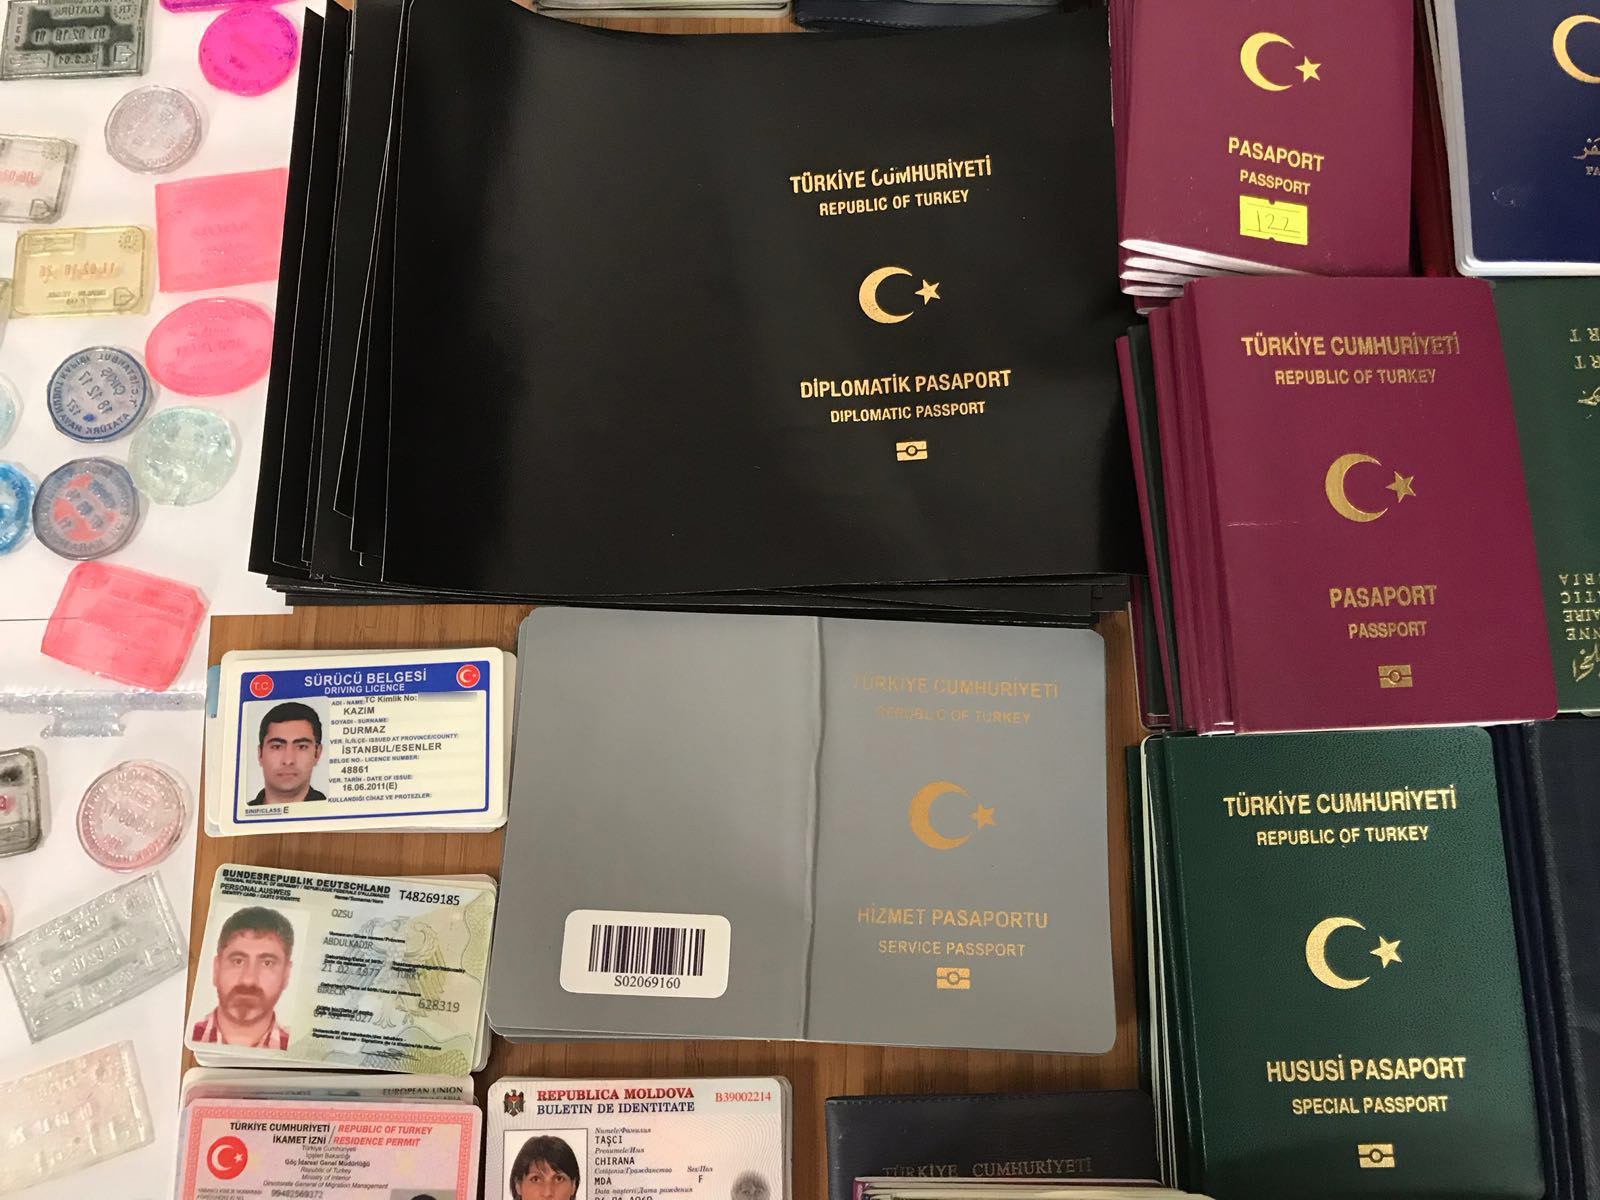 Sahte pasaport operasyonunda FETÖ izi